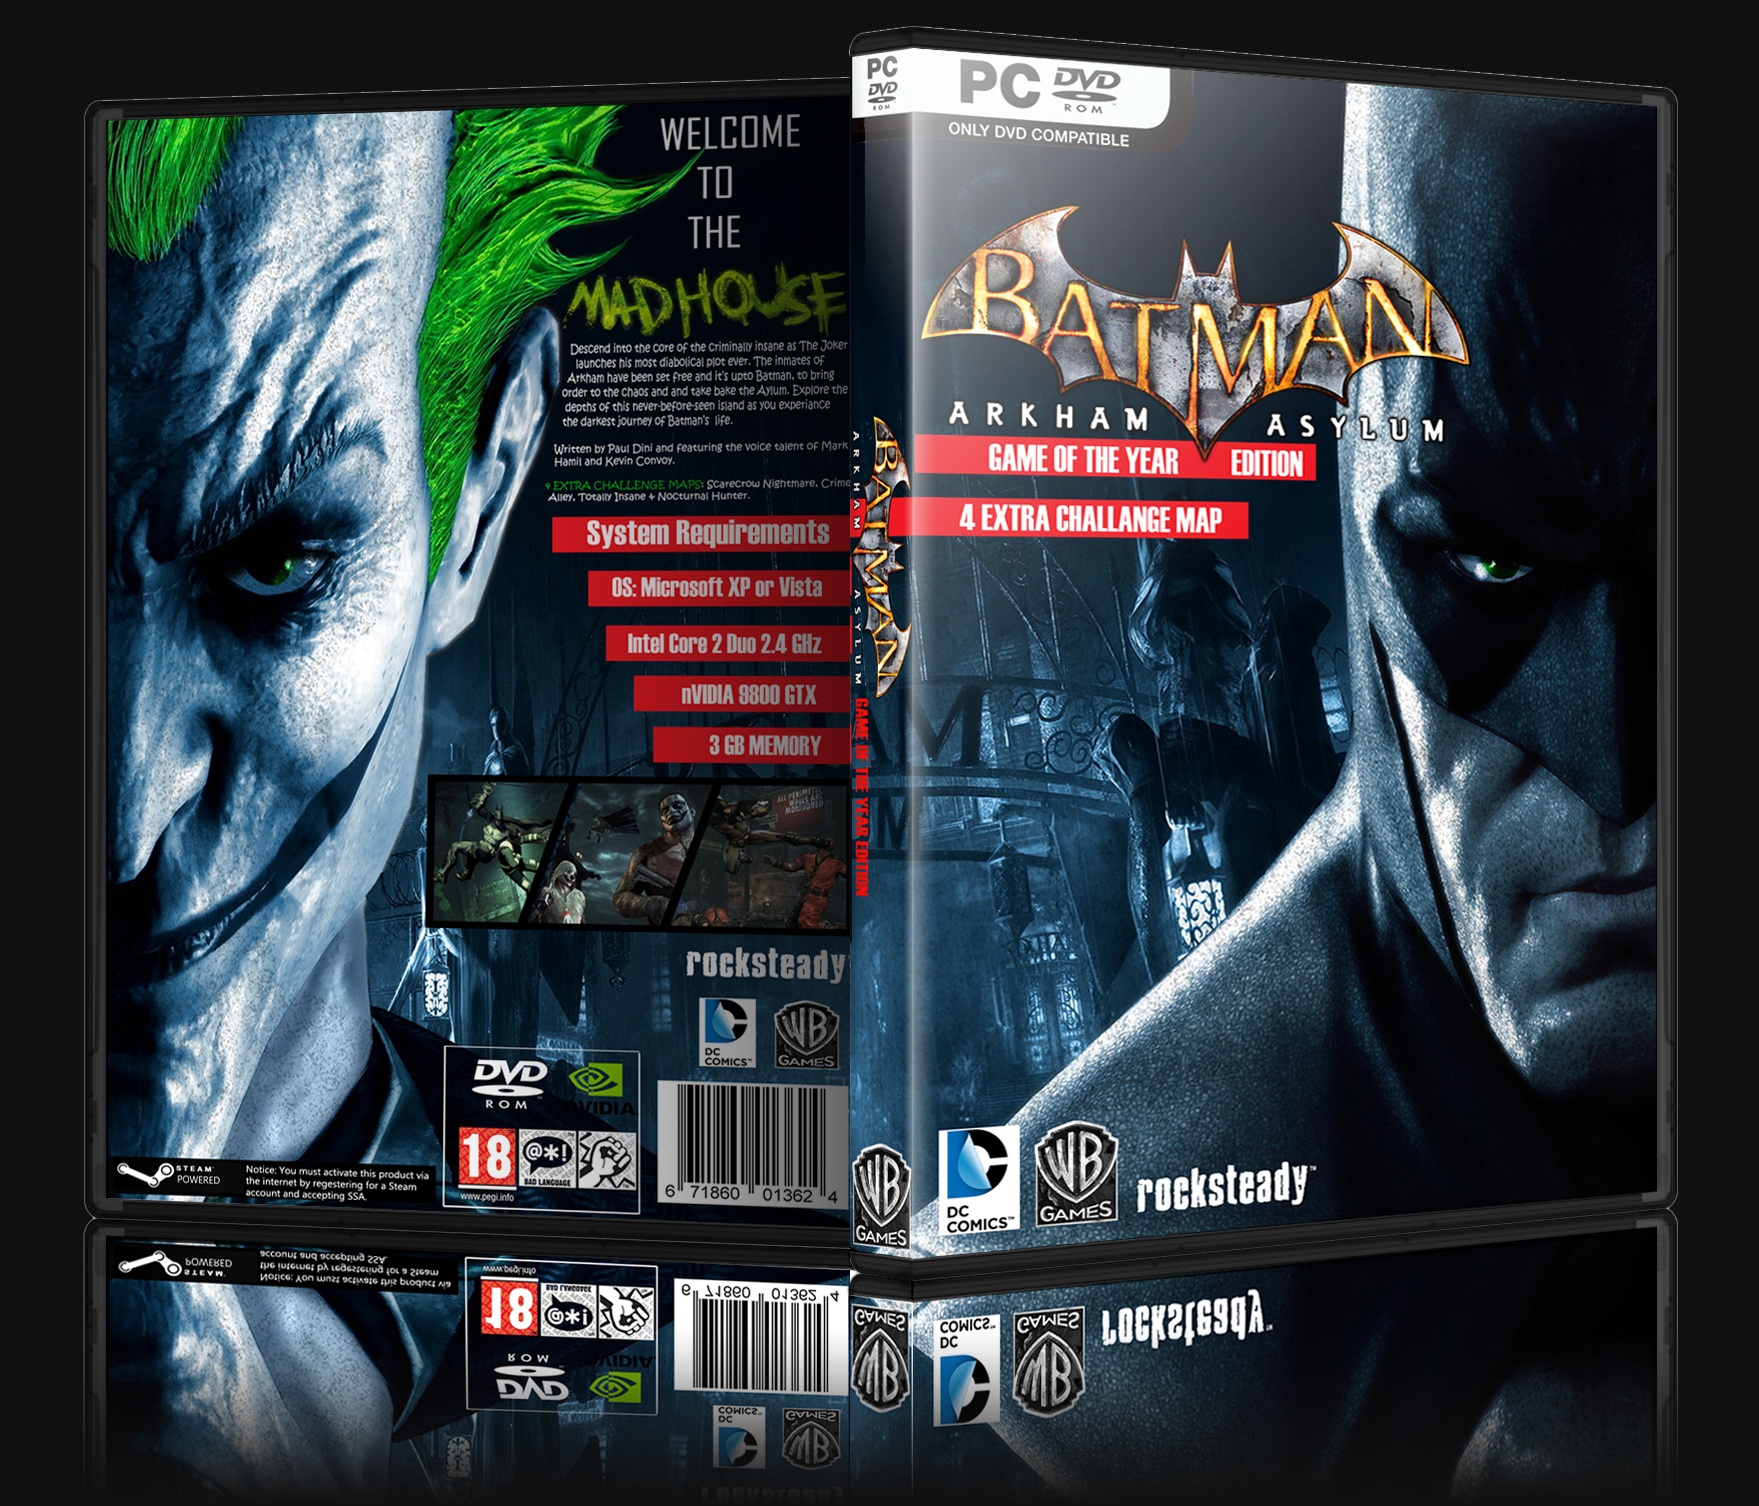 Batman Arkham Asylum: Game of The Year Edition box cover